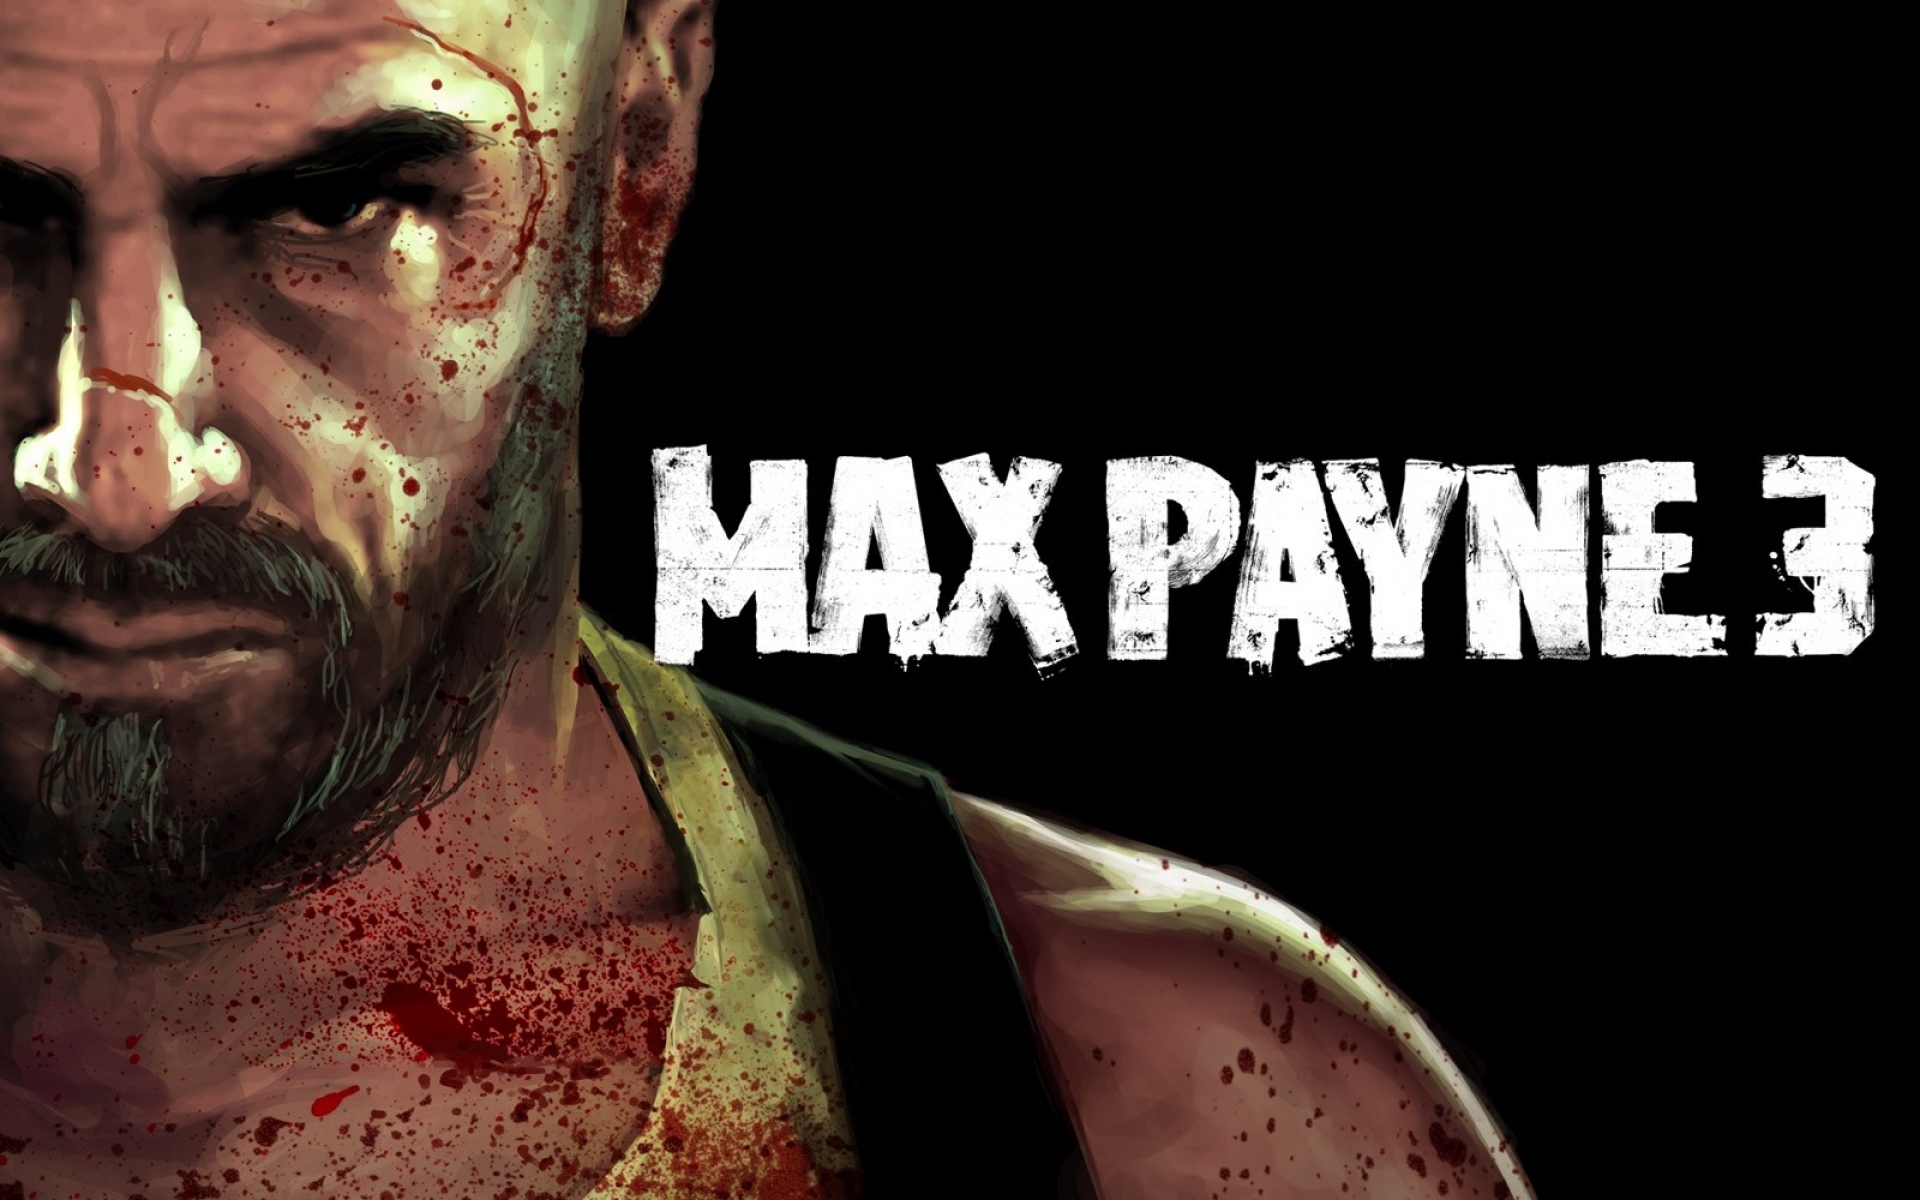 Картинки Max payne 3, лицо, характер, кровь, борода, плечо, спрей фото и обои на рабочий стол